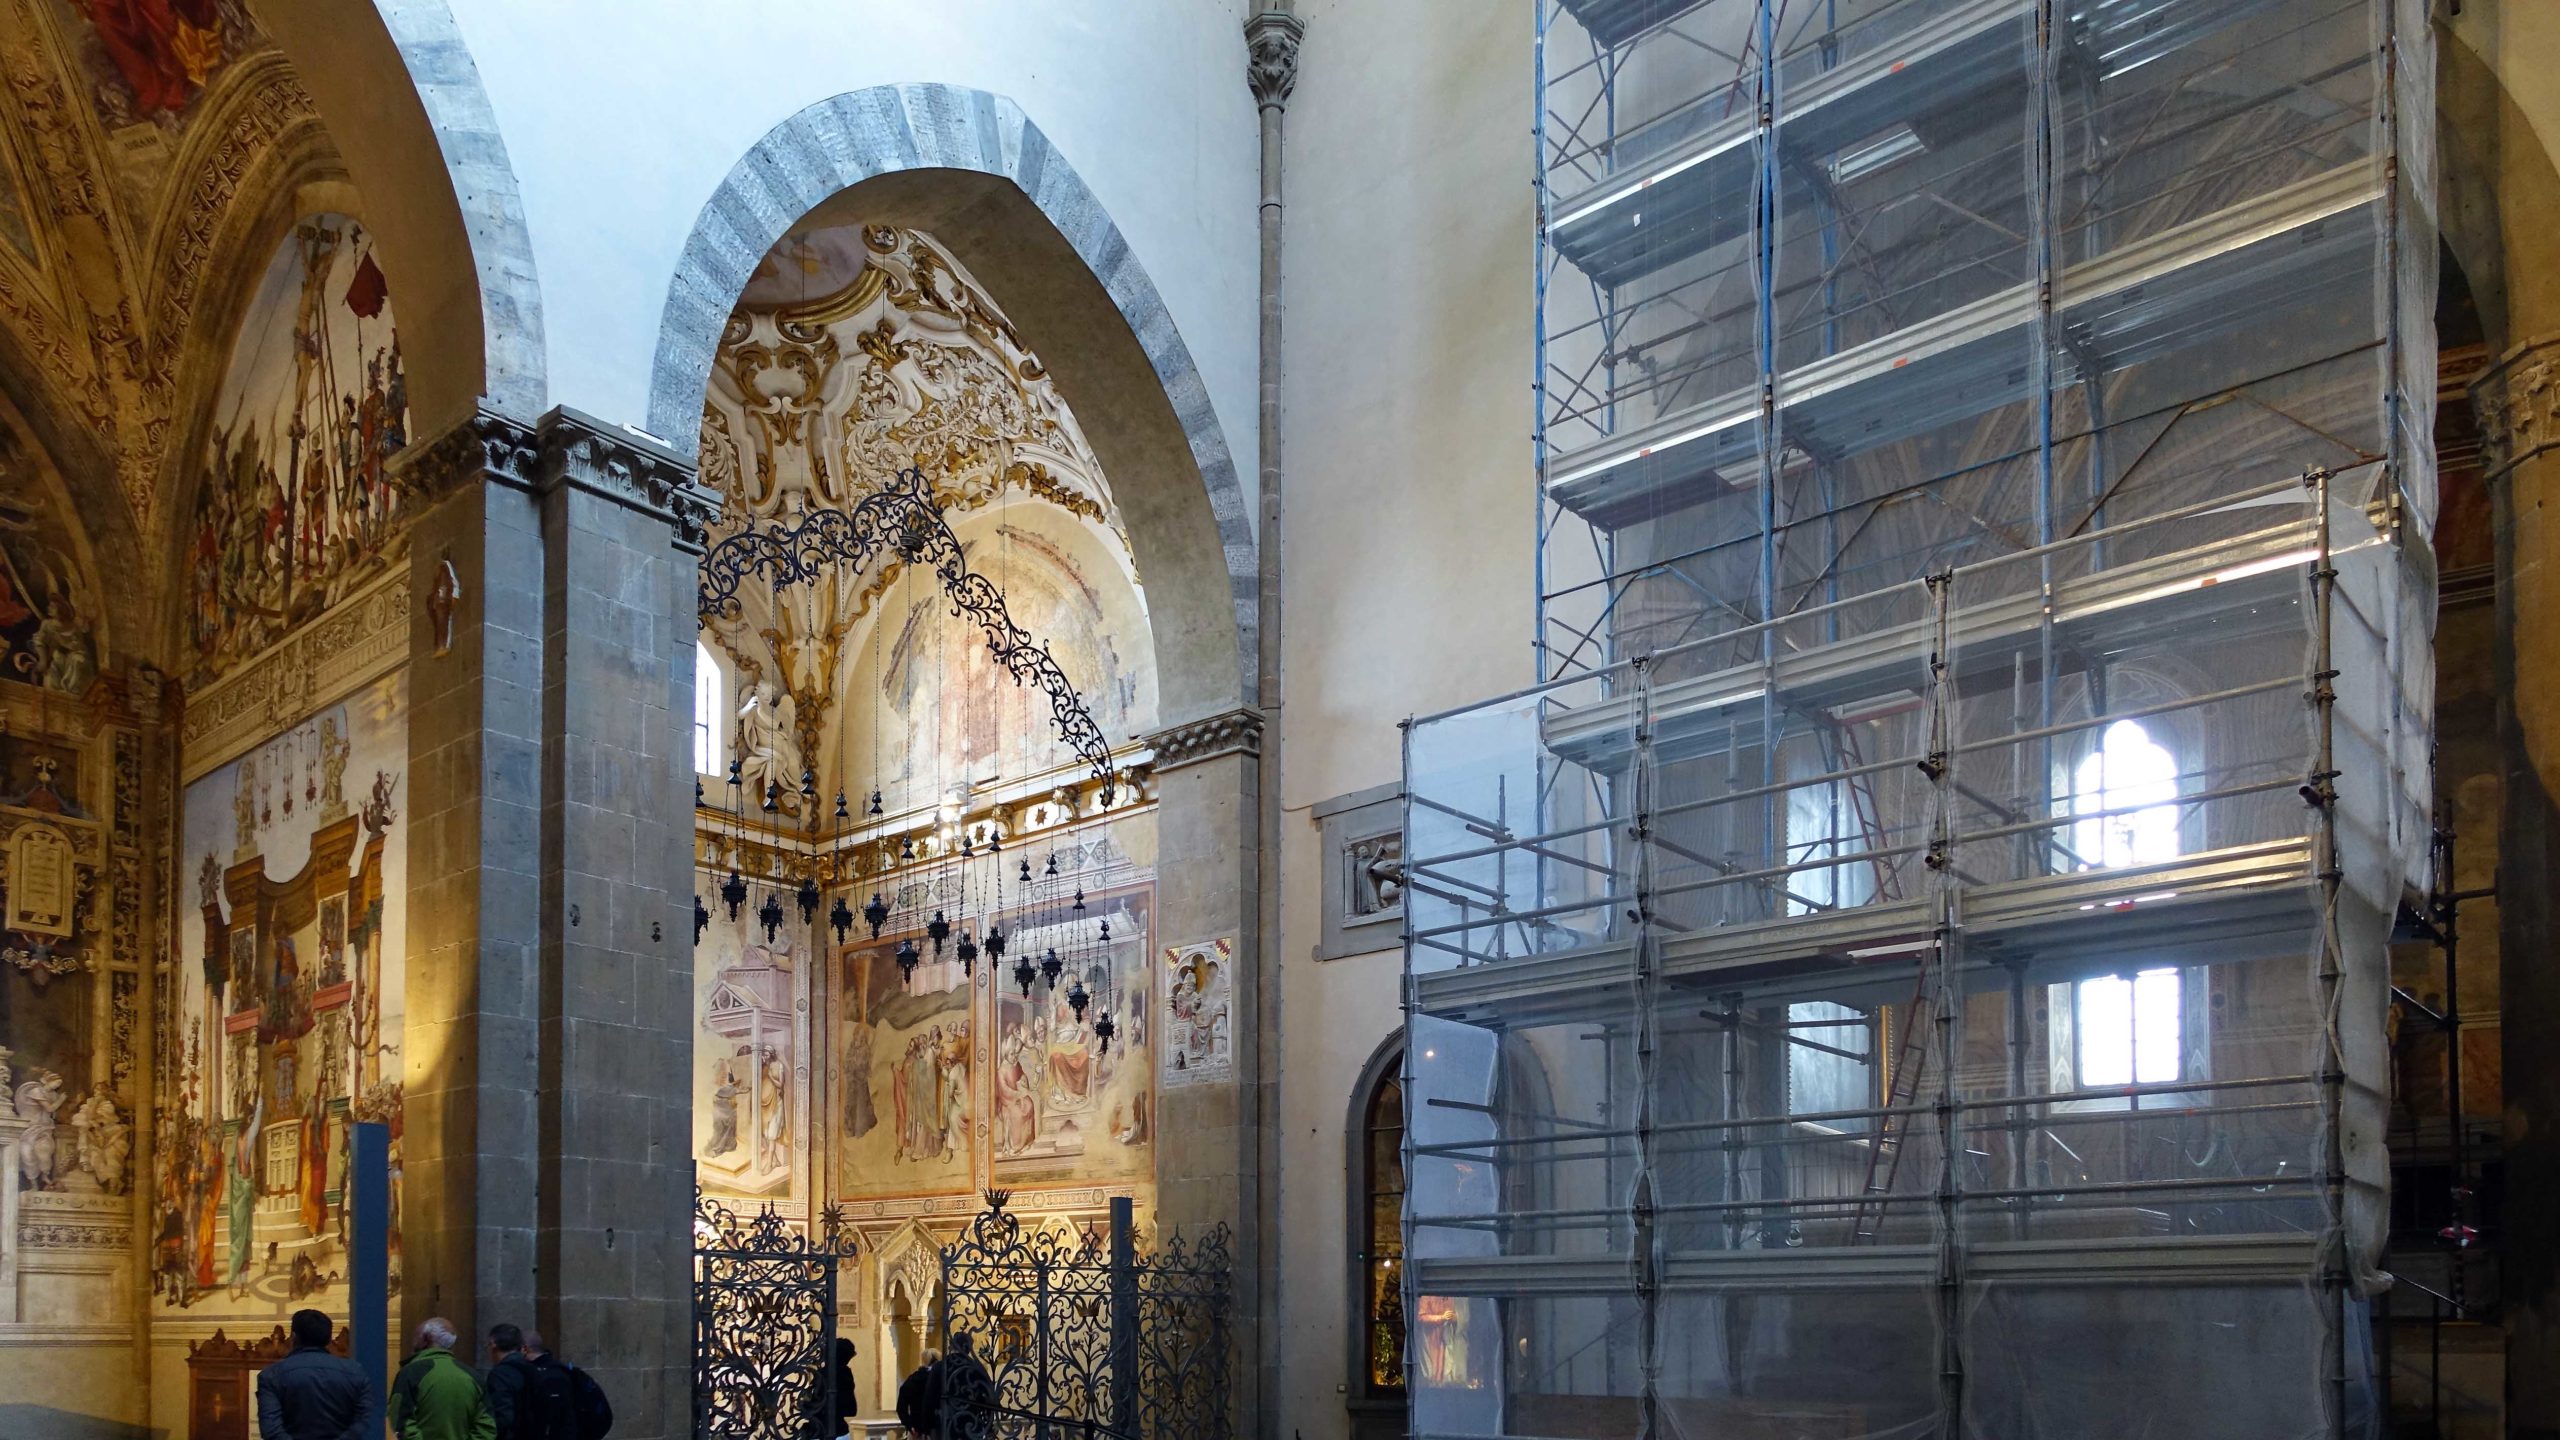 Possible original location of the Rucellai Madonna, right transept, Santa Maria Novella, Filippo Strozzi Chapel left, Bardi Chapel (Gregory) center, Rucellai Chapel under scaffolding